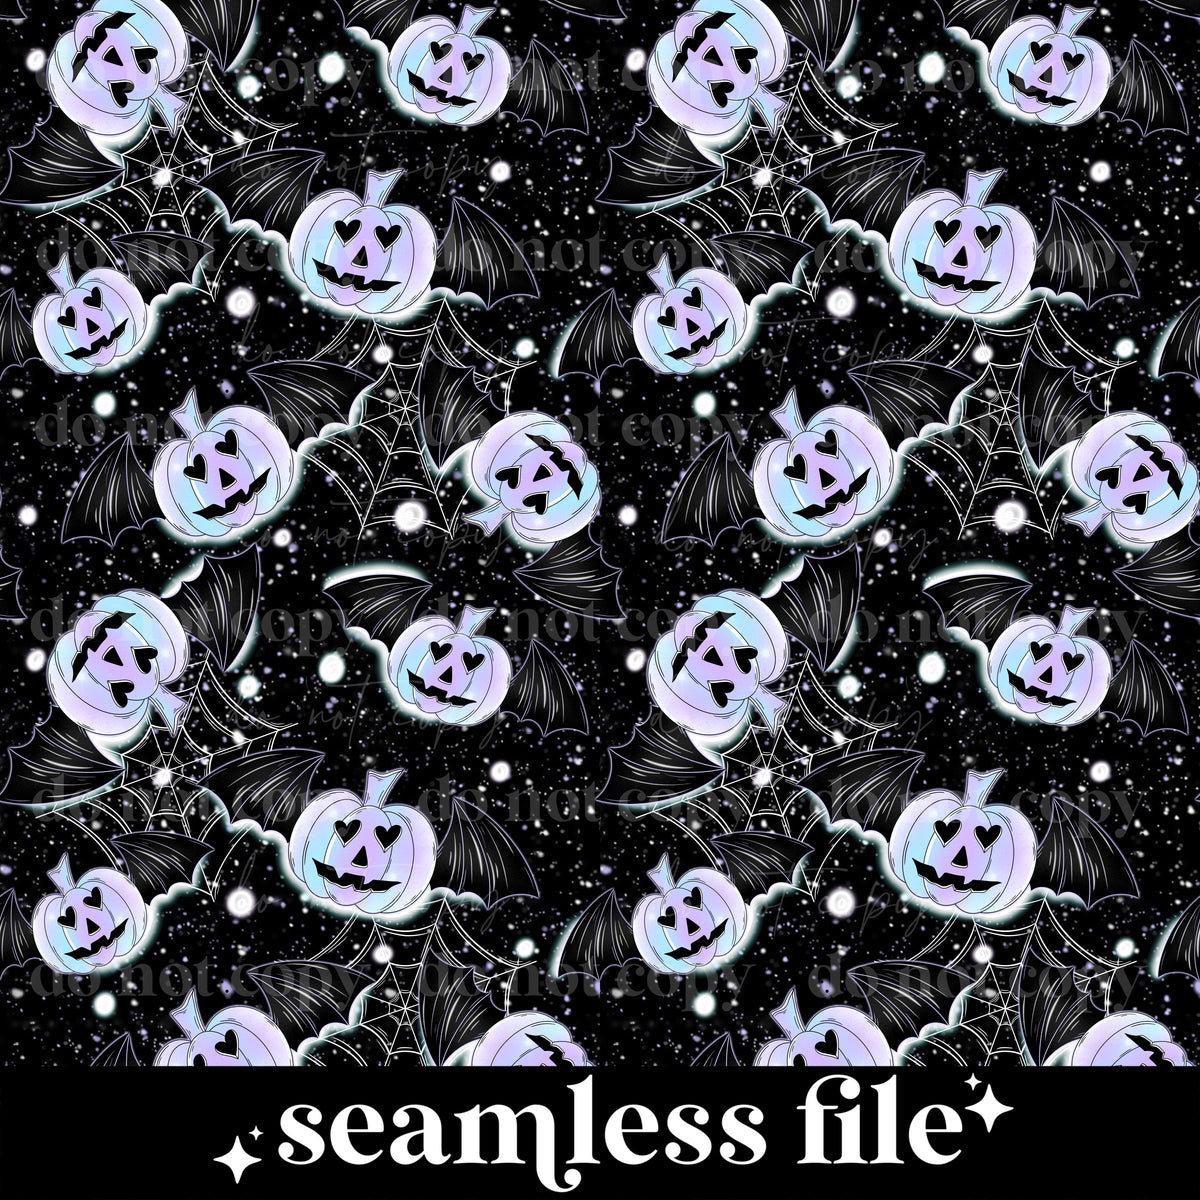 Spooky Pumpkins seamless